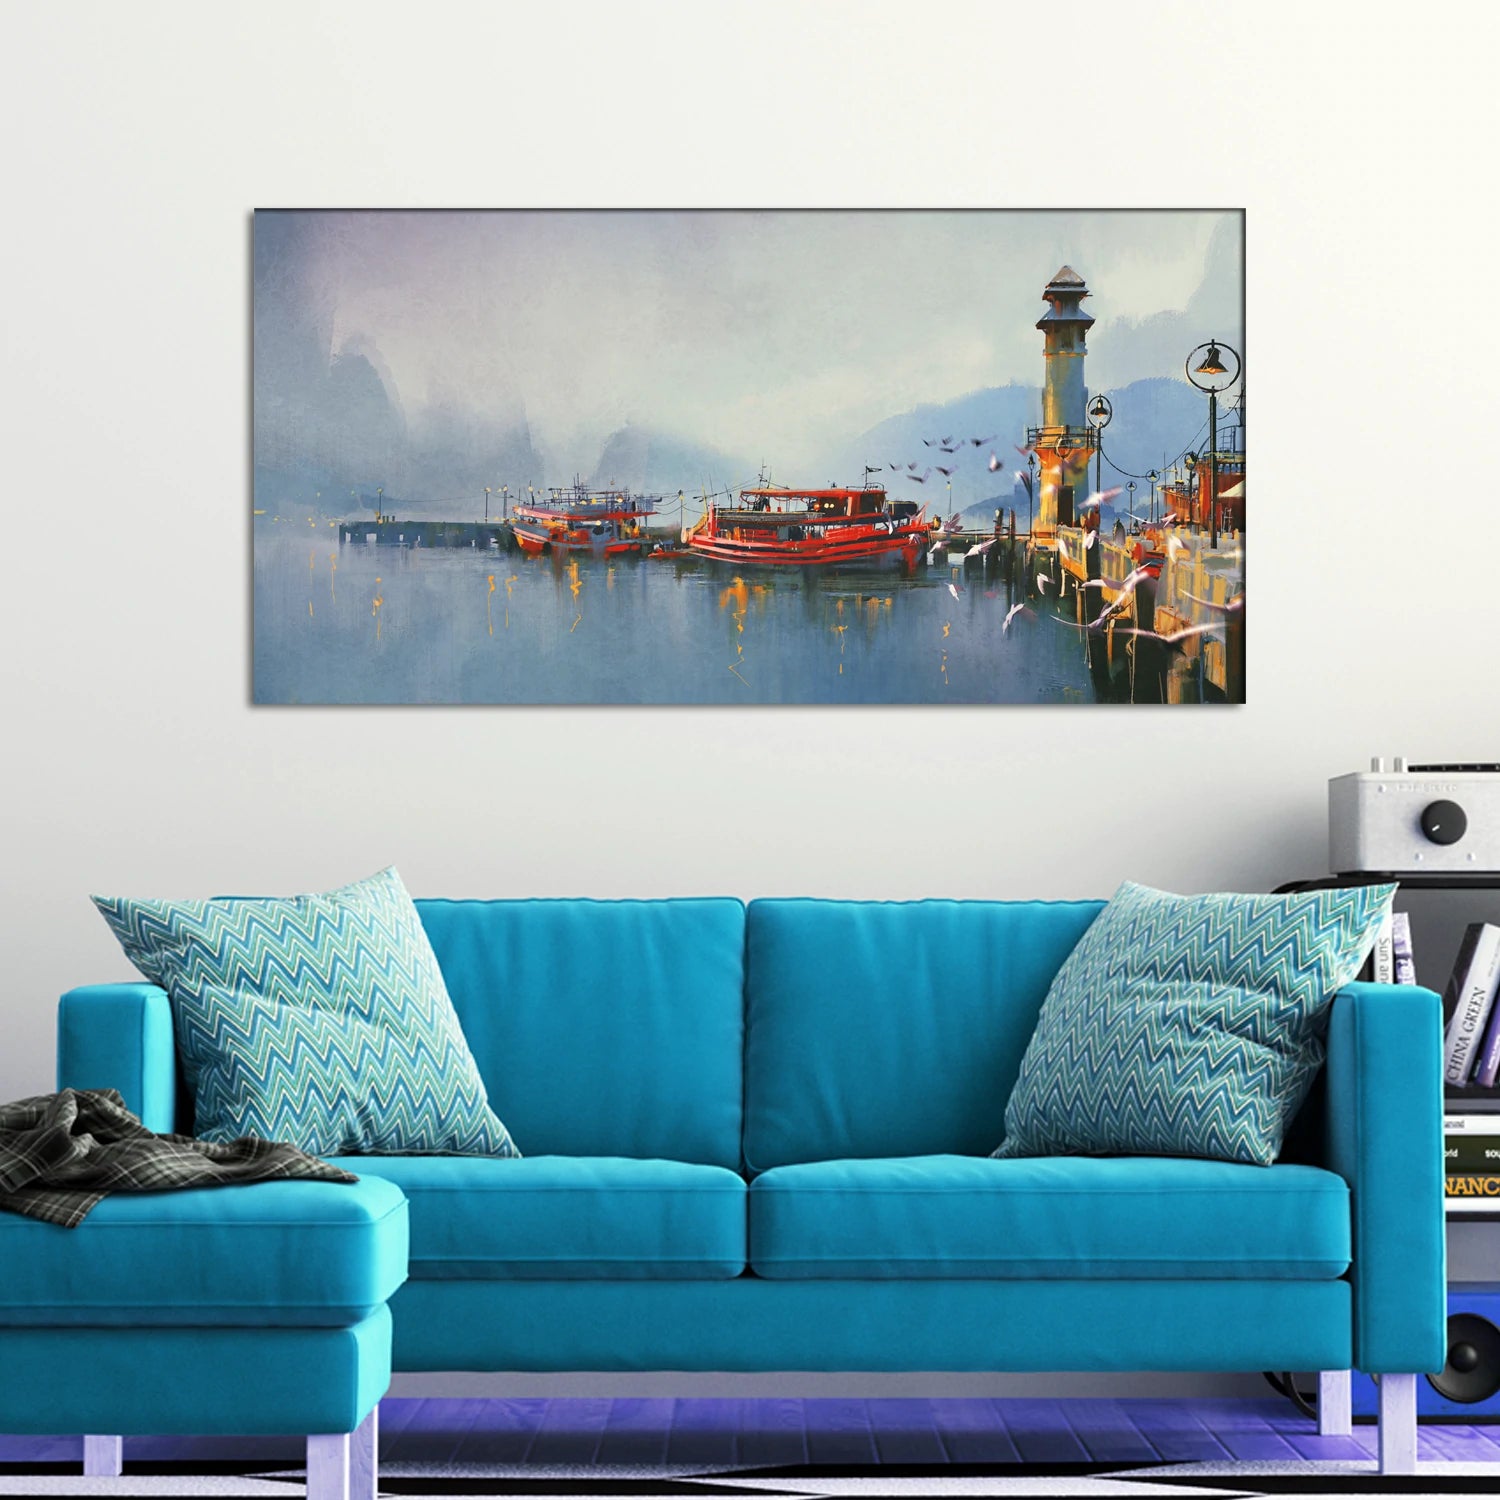 Boat Abstract Canvas Print Wall Painting